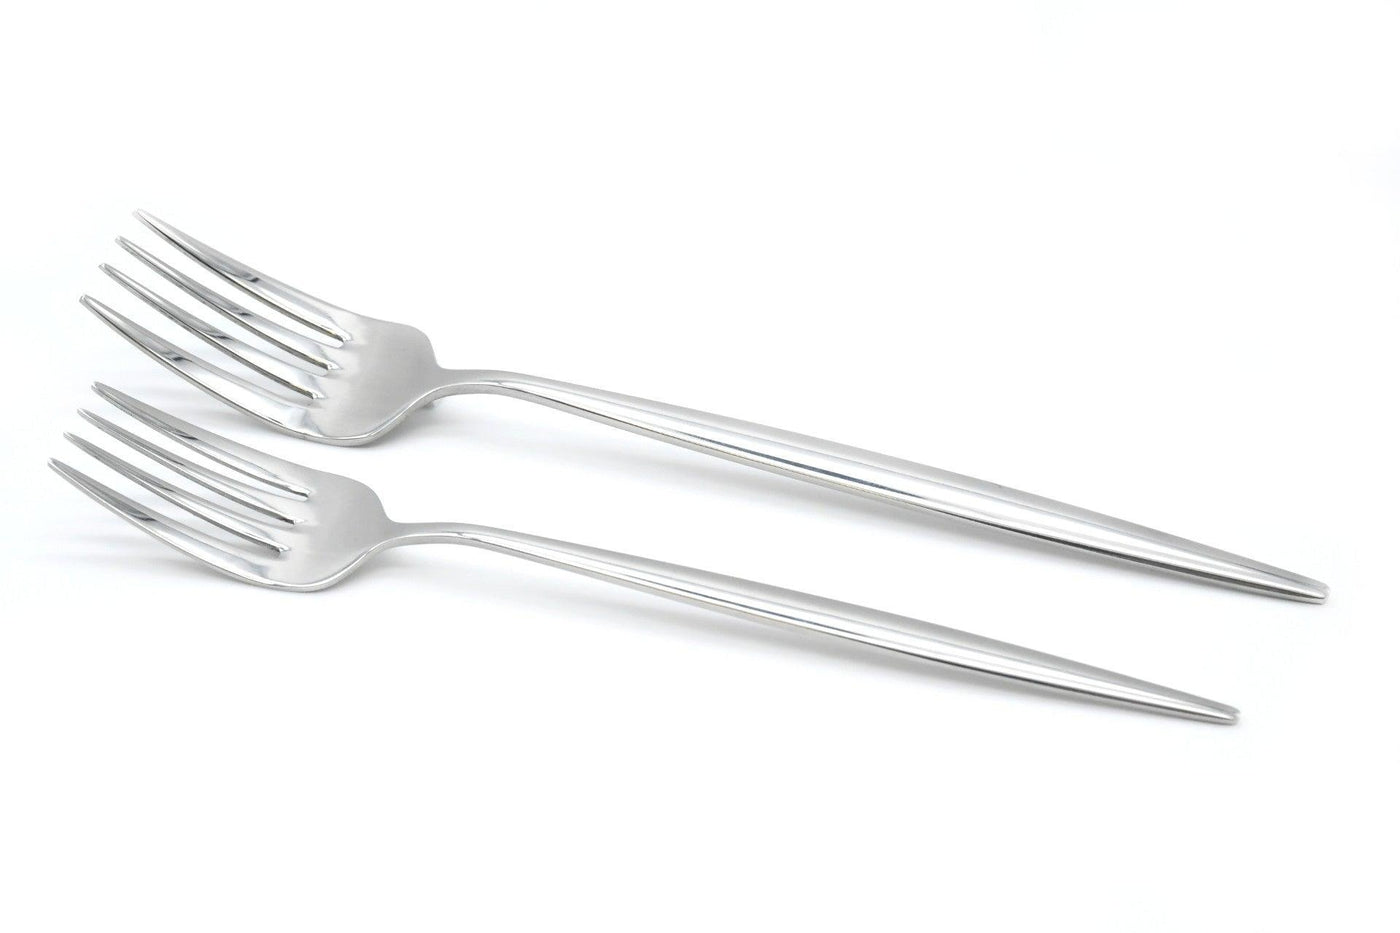 Lorena 20-Piece Stainless Steel Silverware Flatware Cutlery Set, Service for 4, Eclipse